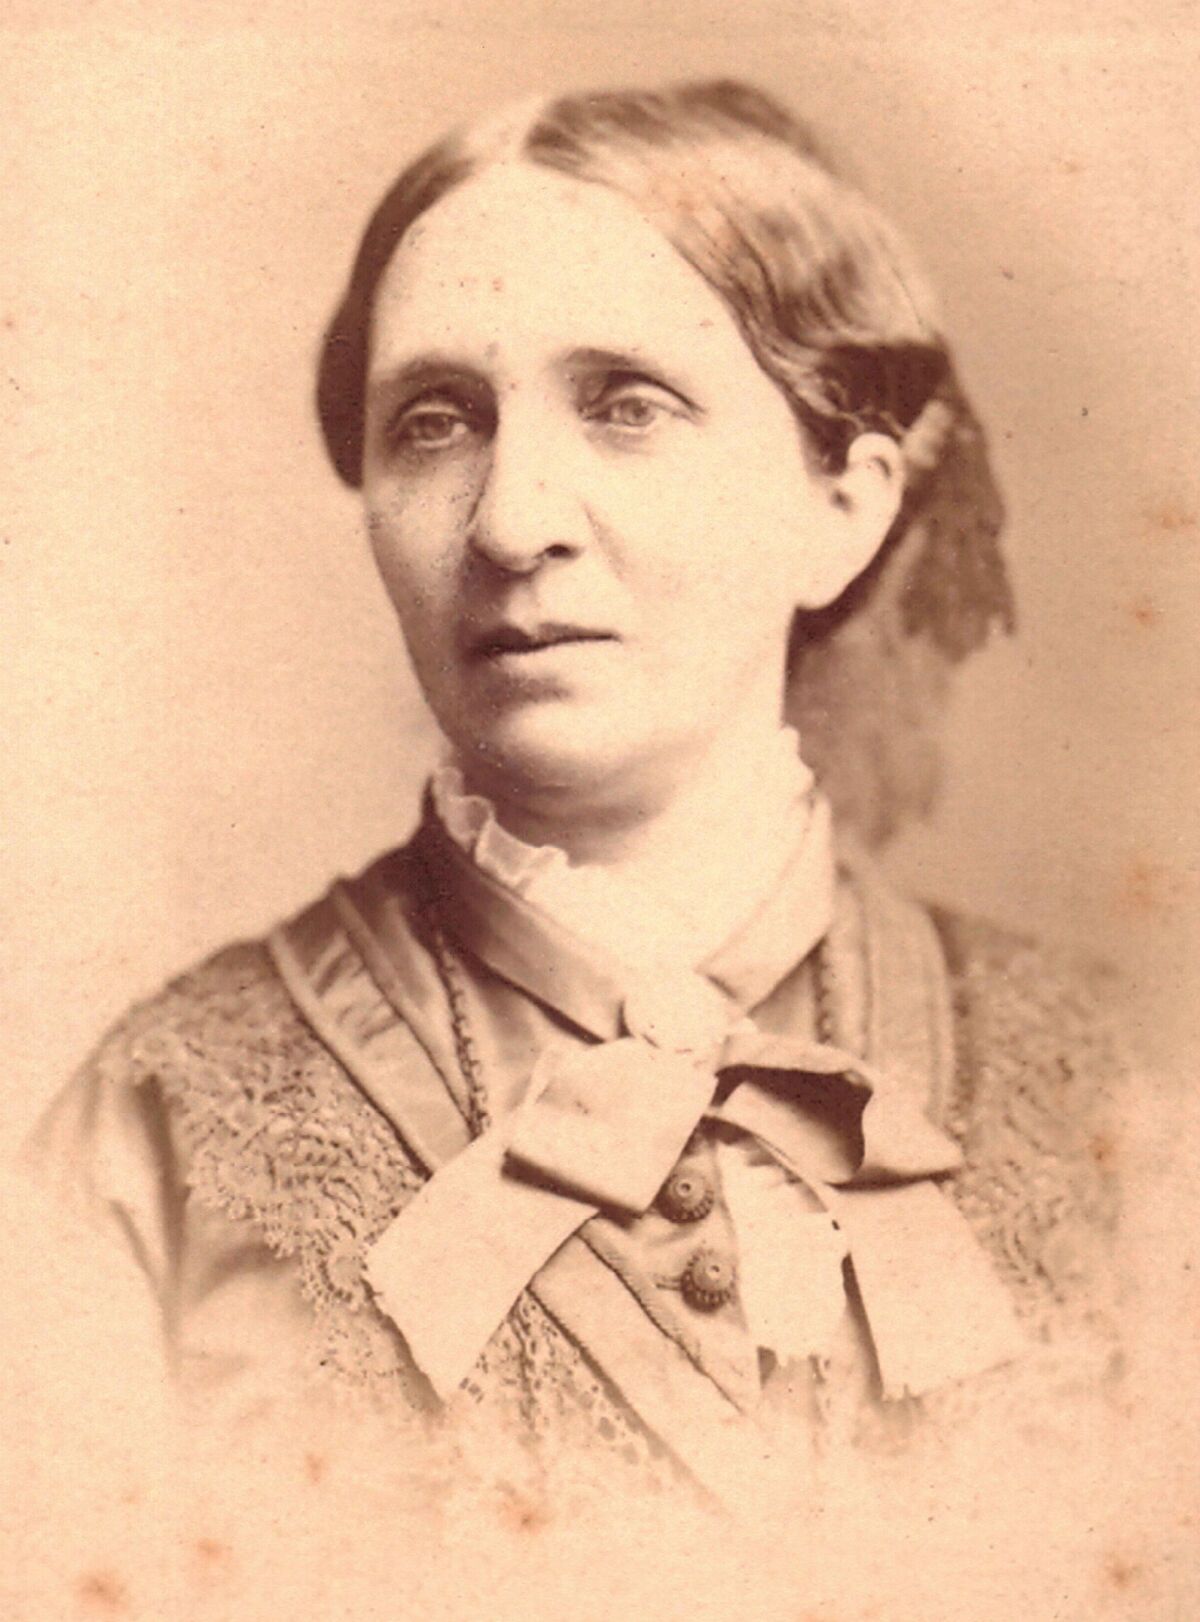 Ellen Craft circa 1870